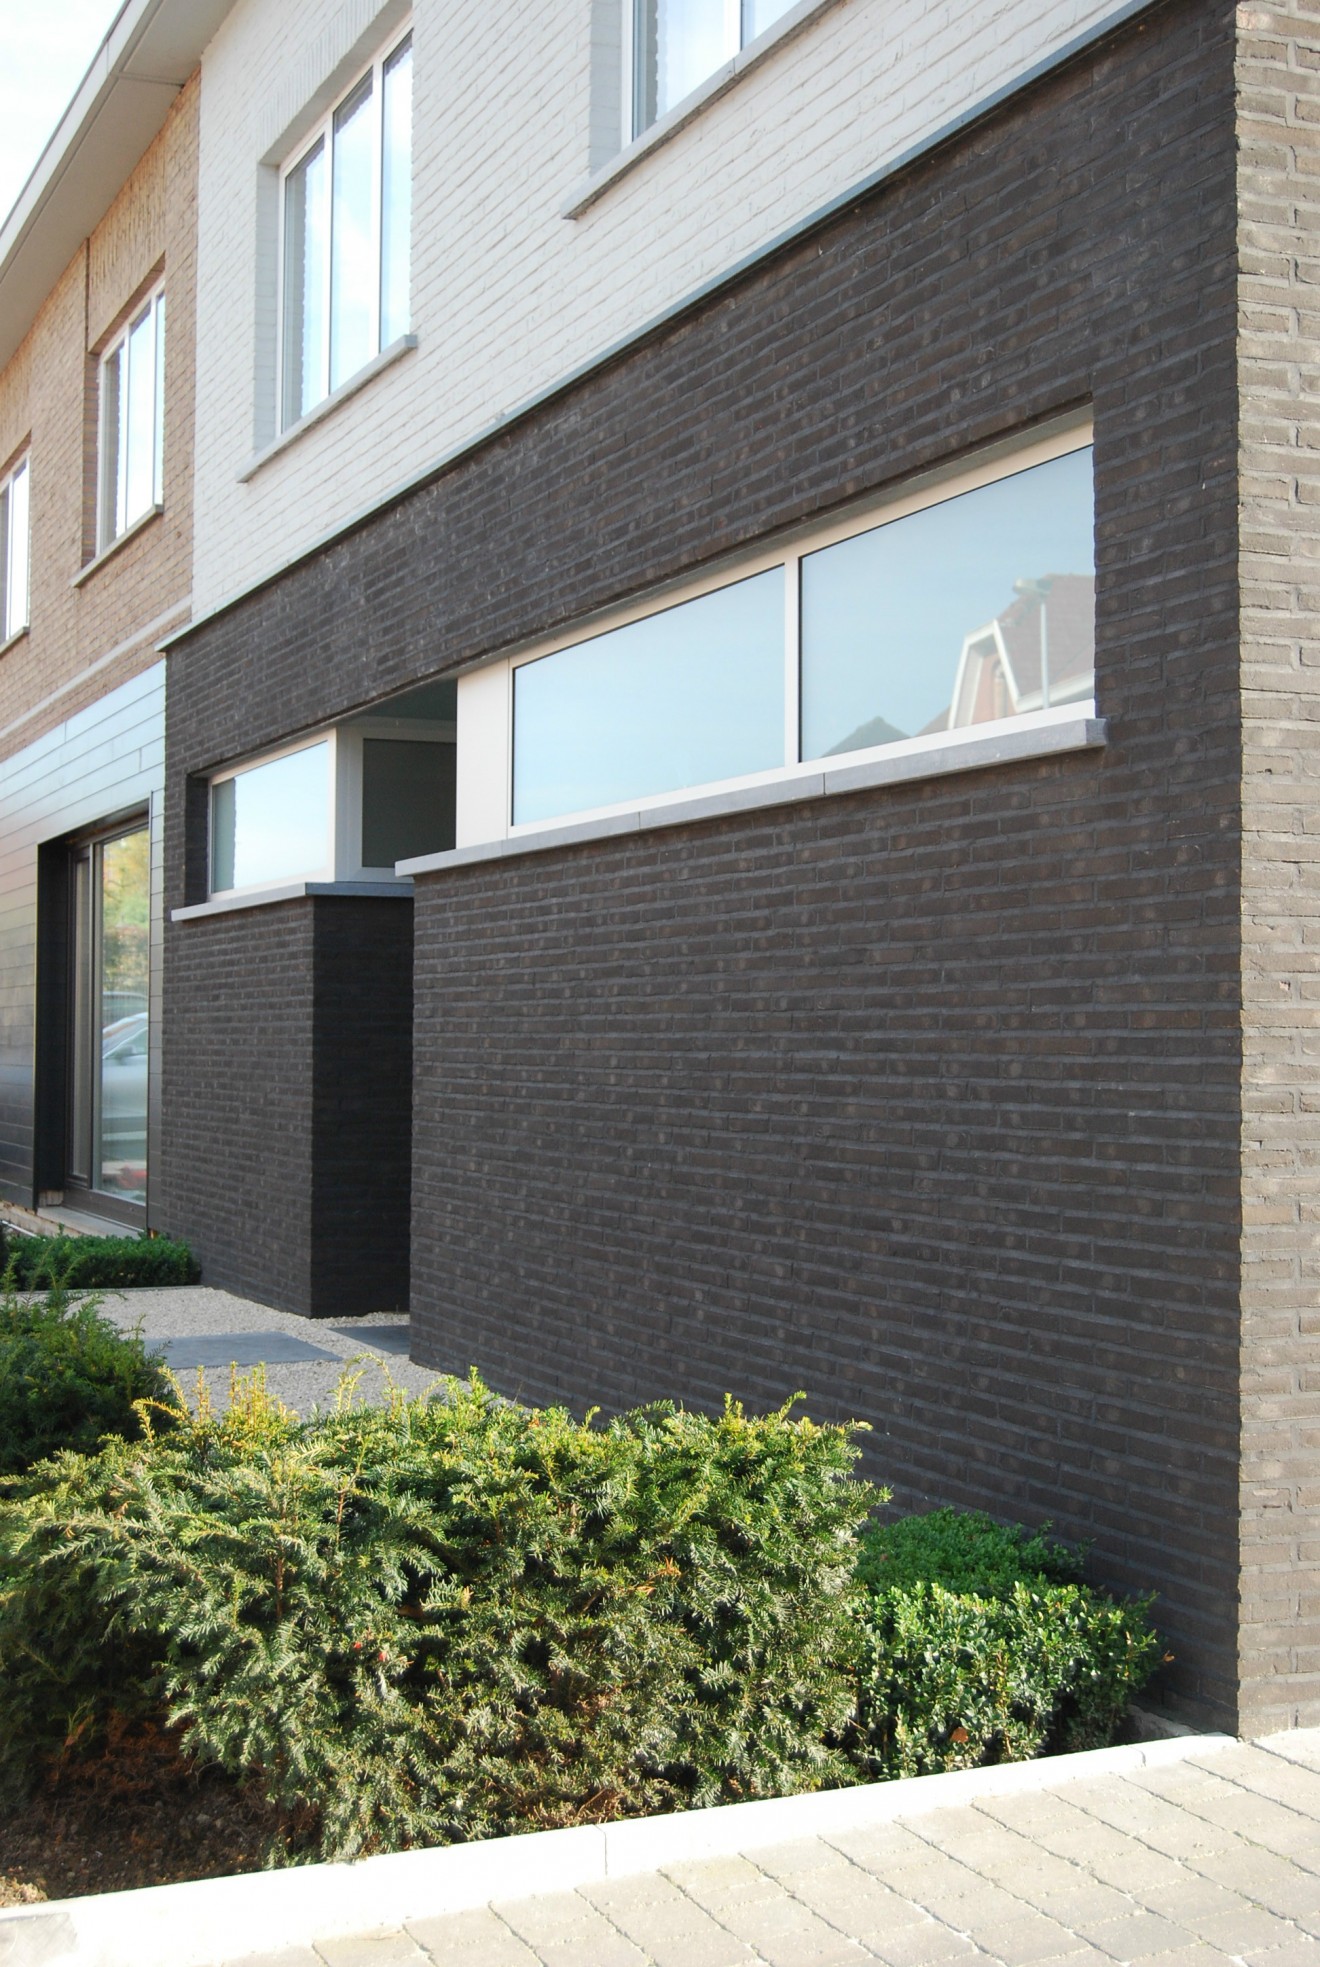 Architect- en ingenieursbureau Andries & Vuylsteke - Verbouwing winkelpand naar gezinswoning 